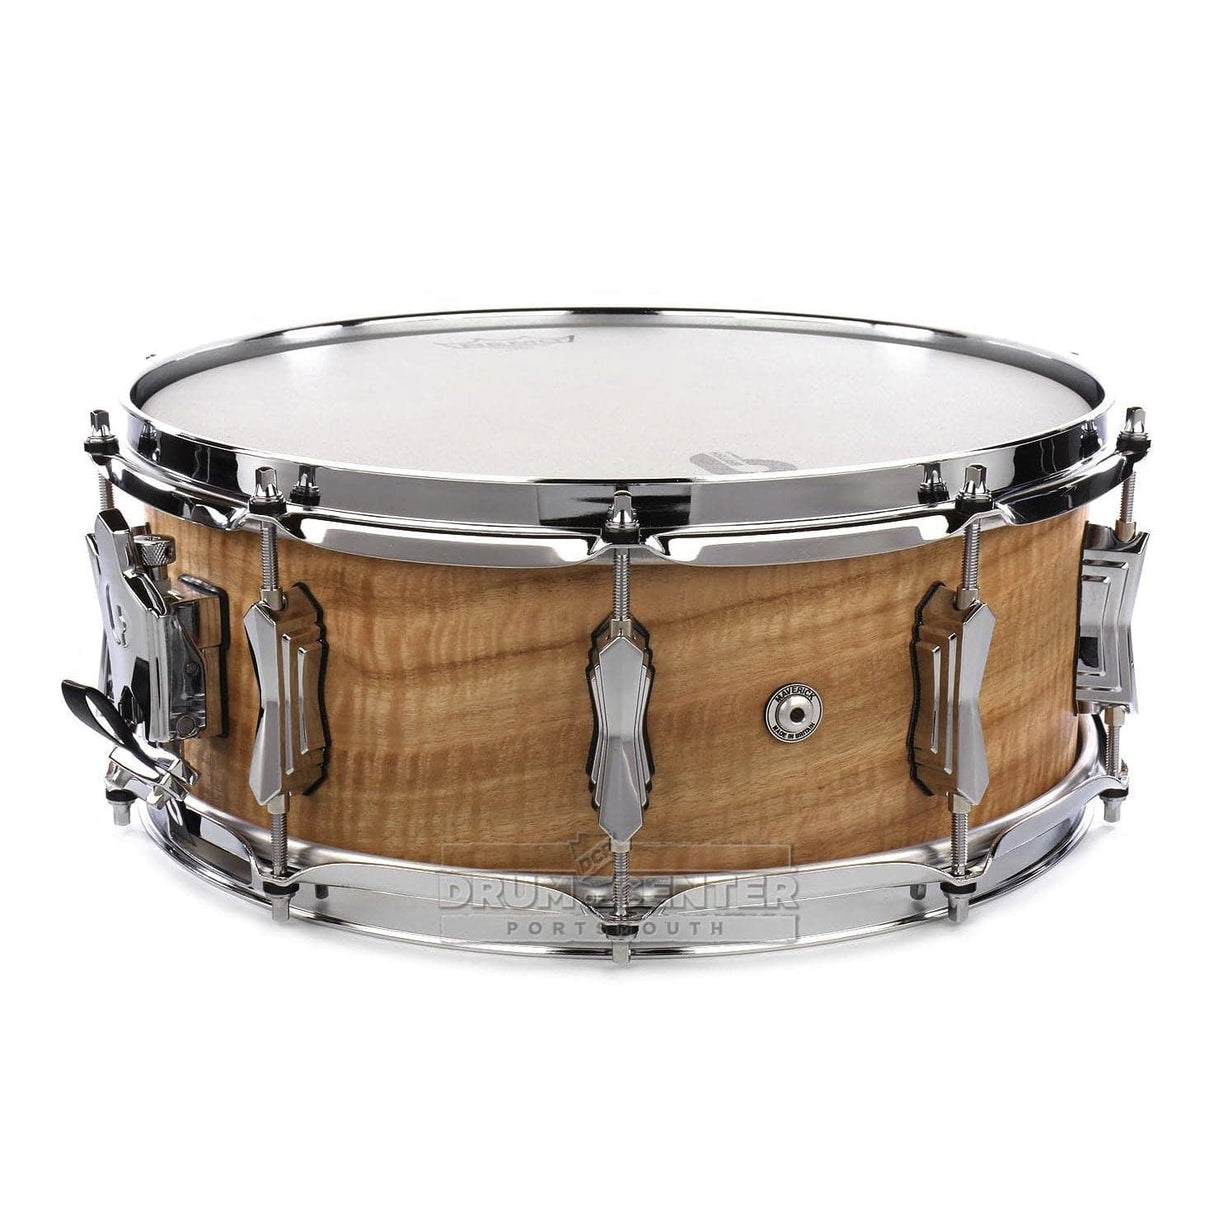 British Drum Company Maverick Snare Drum 14x5.5